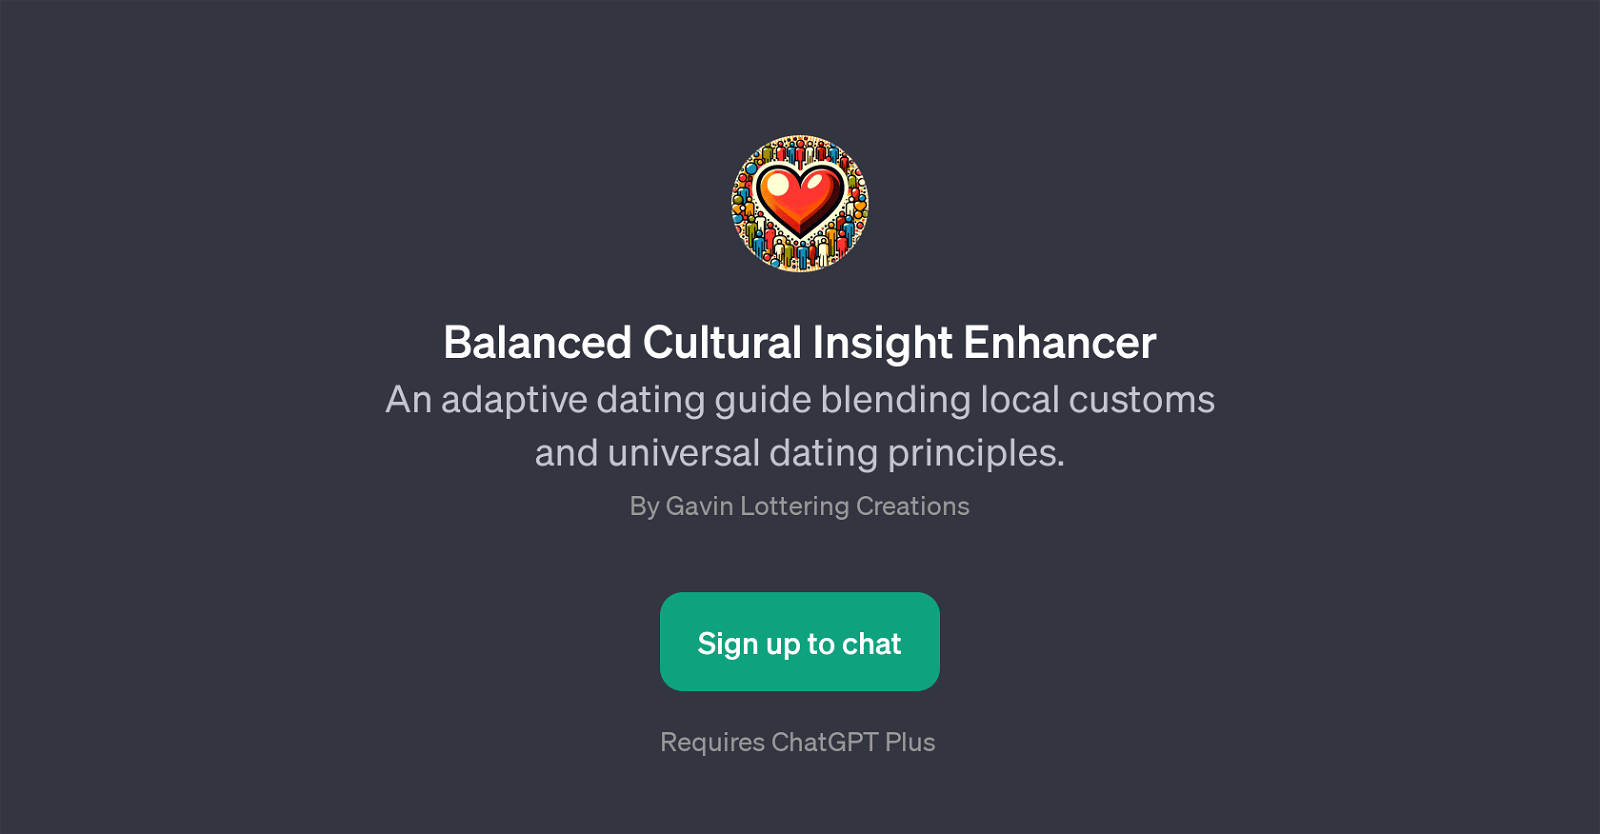 Balanced Cultural Insight Enhancer website